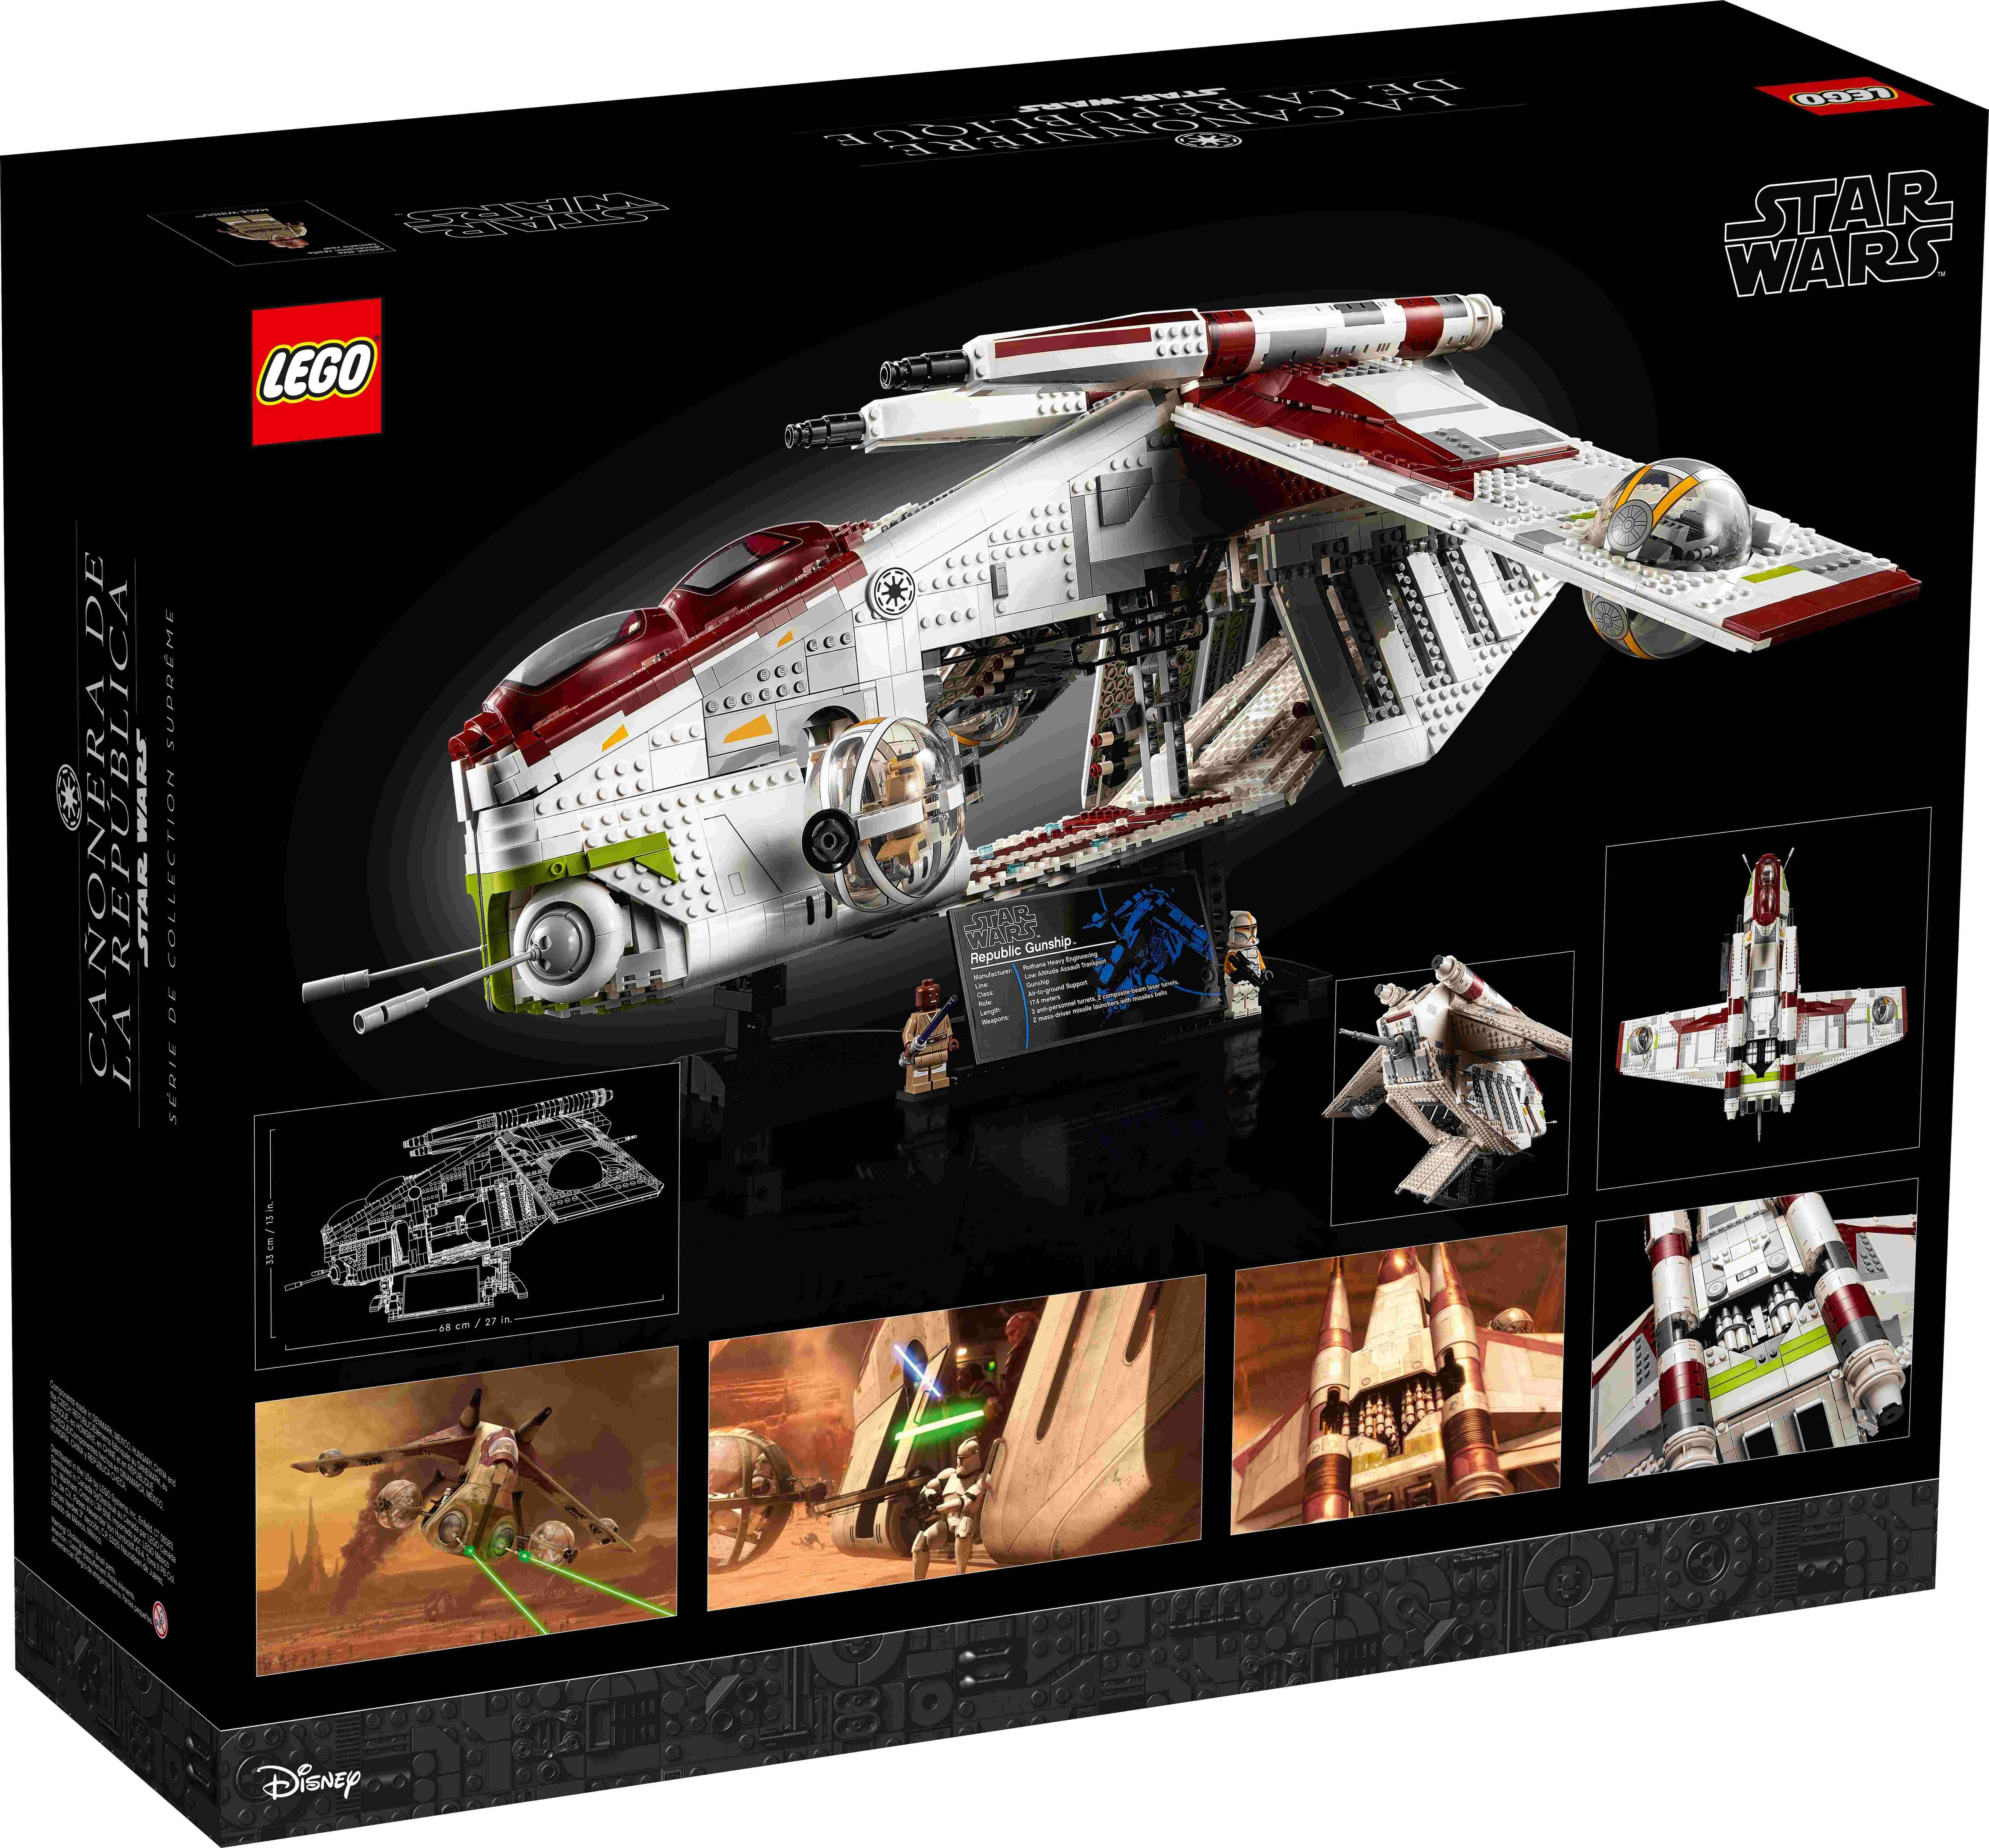 Lego 75309 Star Wars Republic Gunship